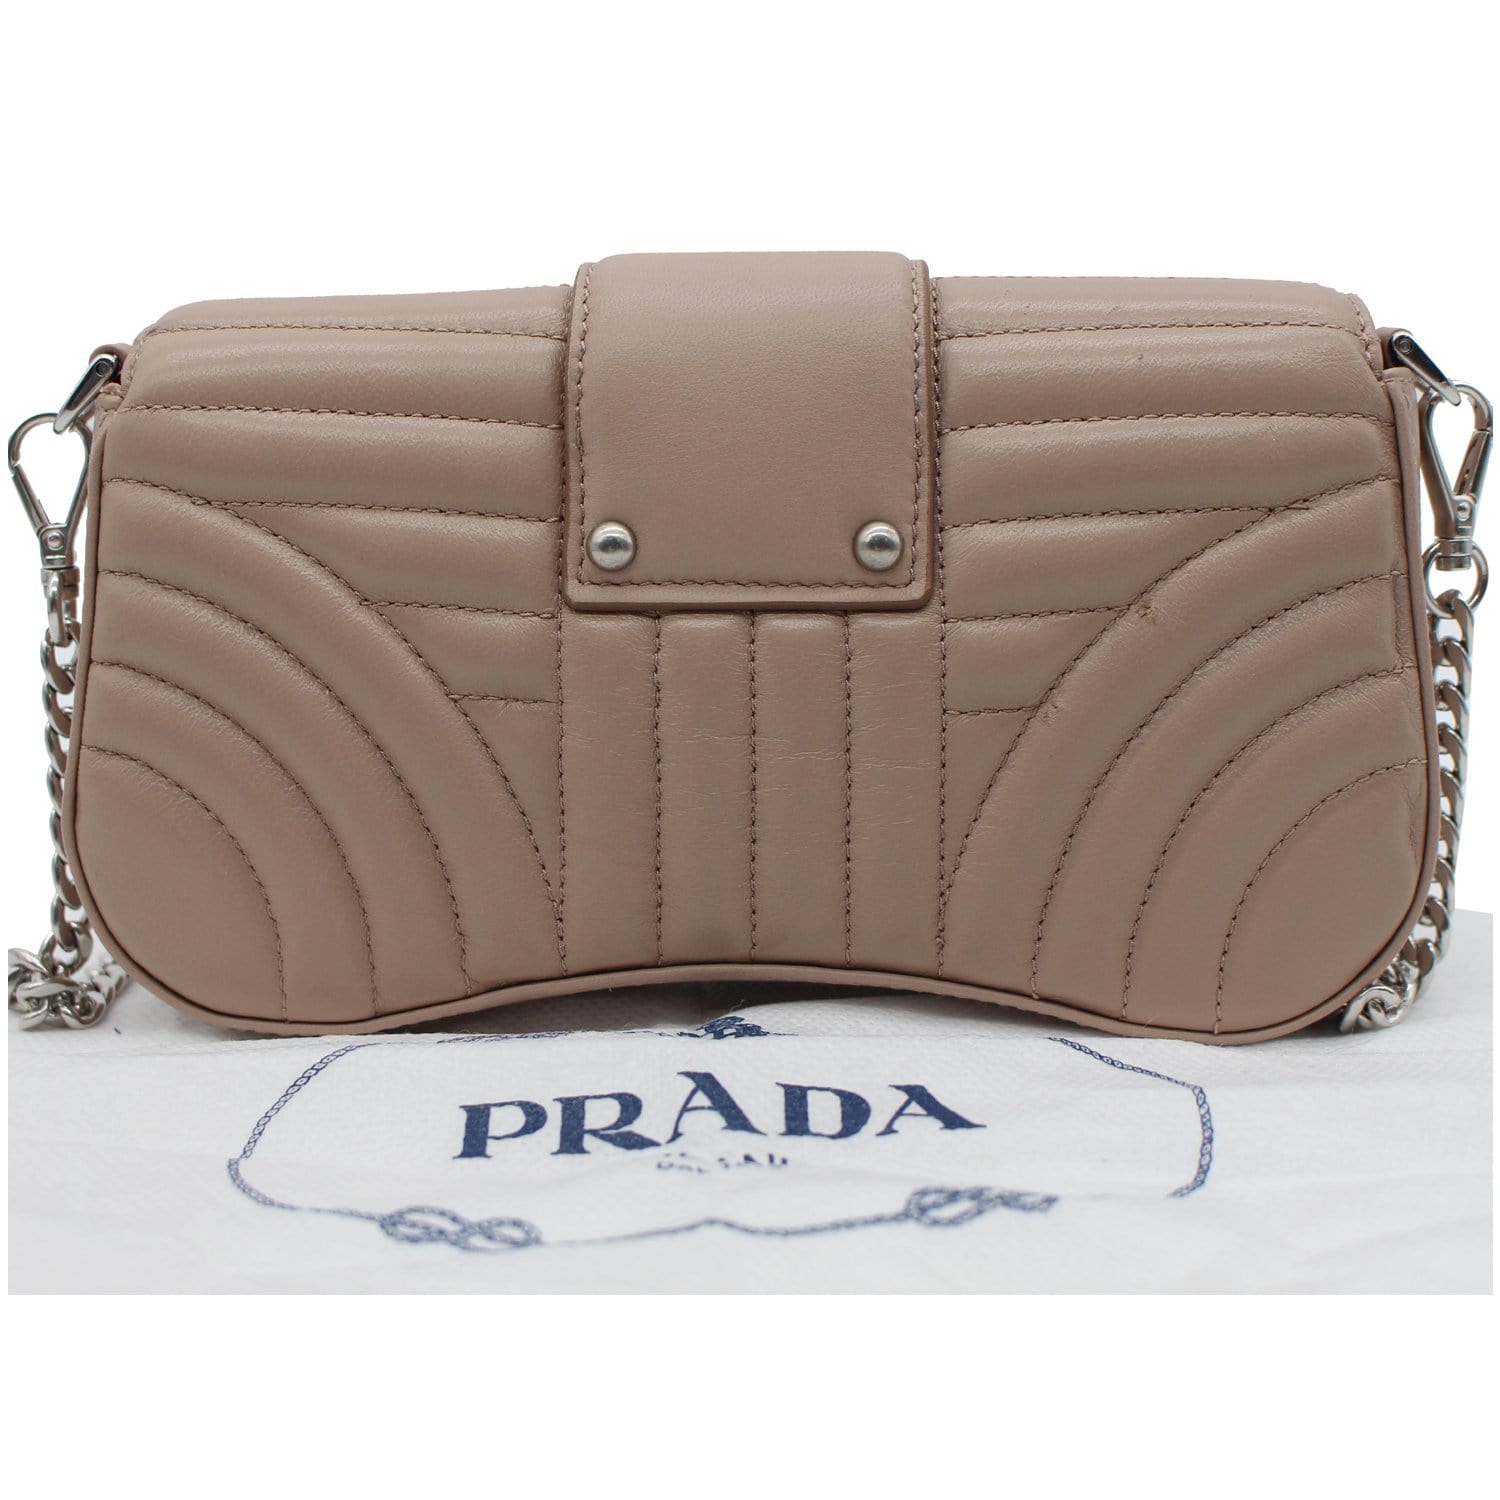 Prada - Nude Leather Front Flap Crossbody